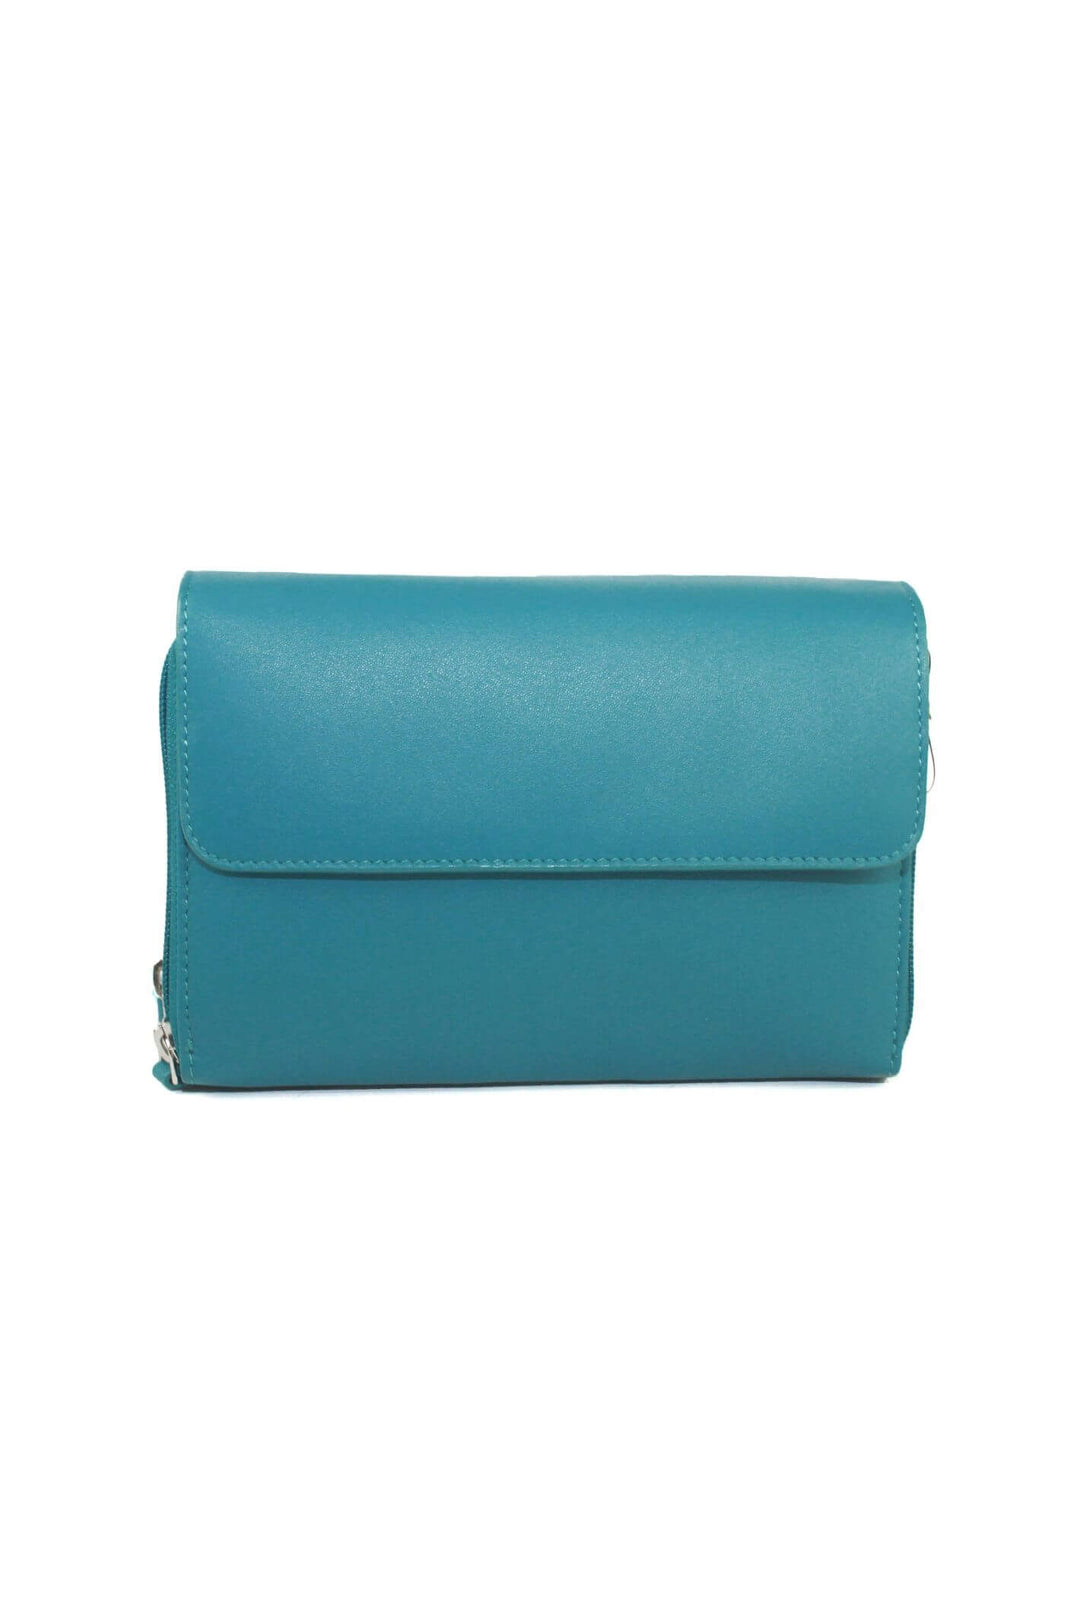 Turquoise Leather Crossbody Clutch Handbag